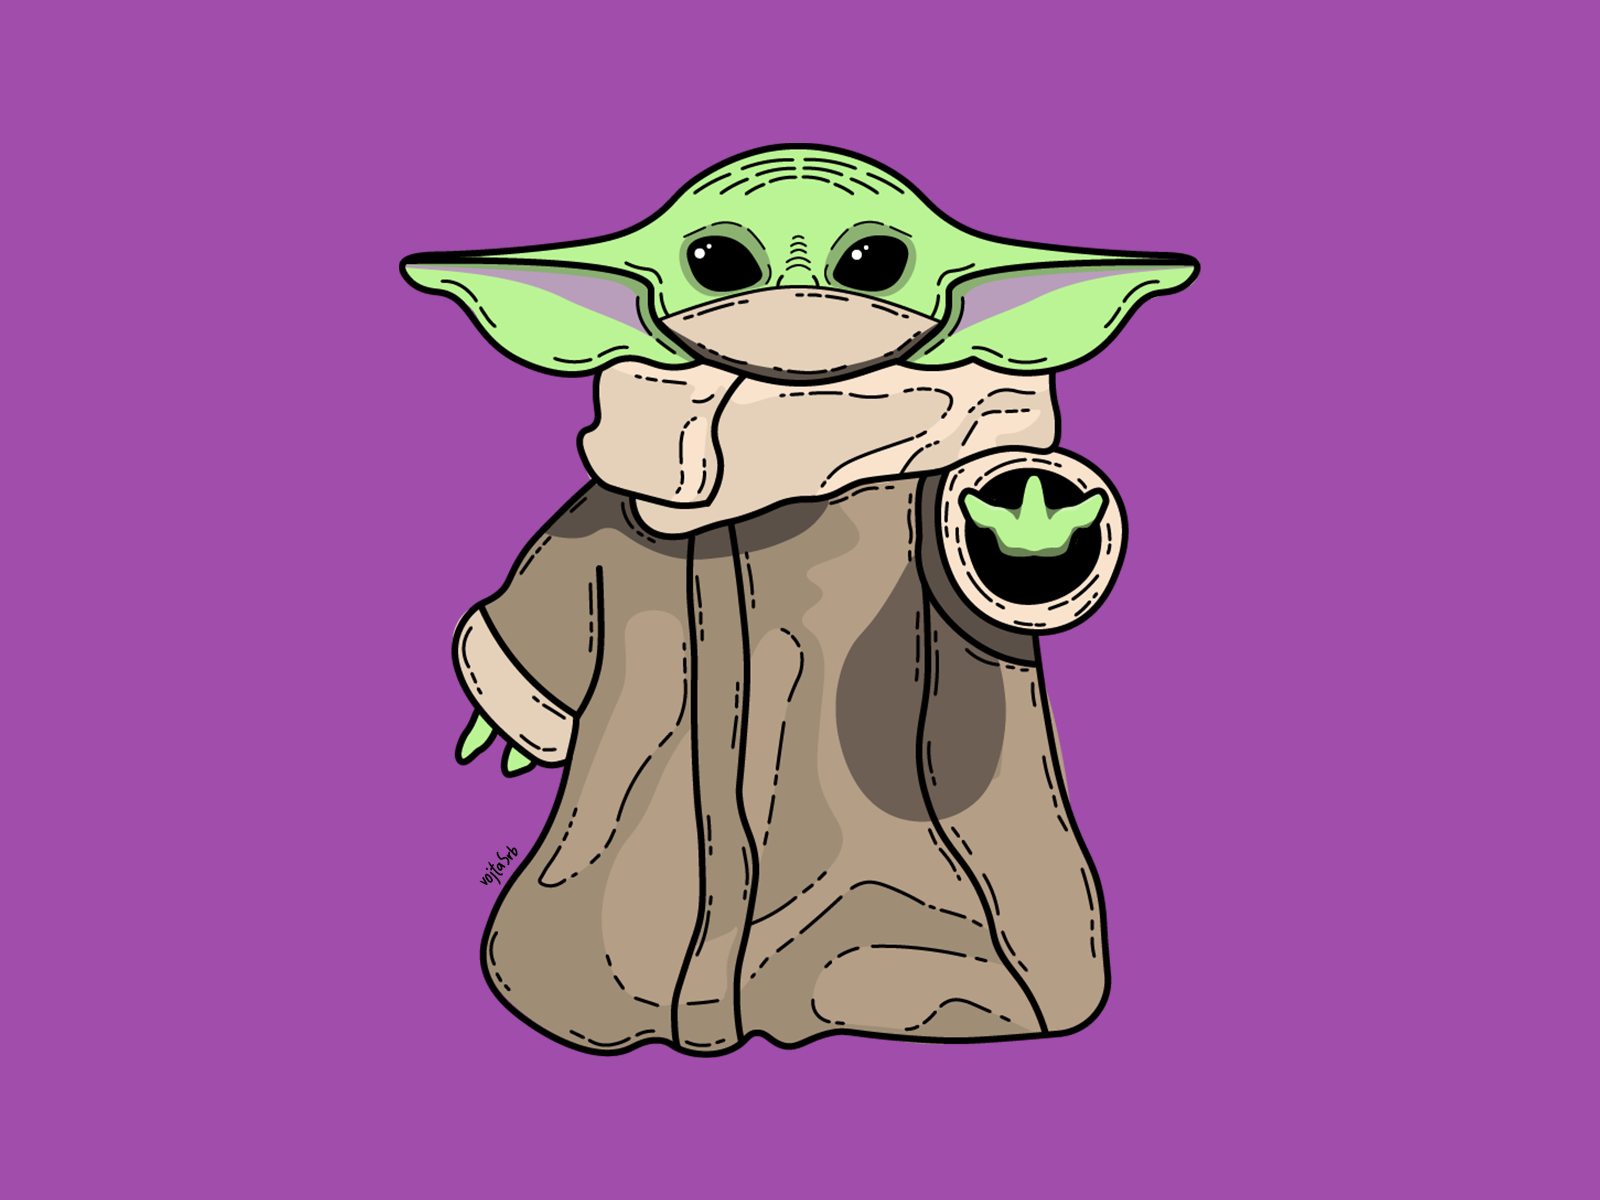 Bobblejot - FANART FRIDAY brings The Child/Baby Yoda (also